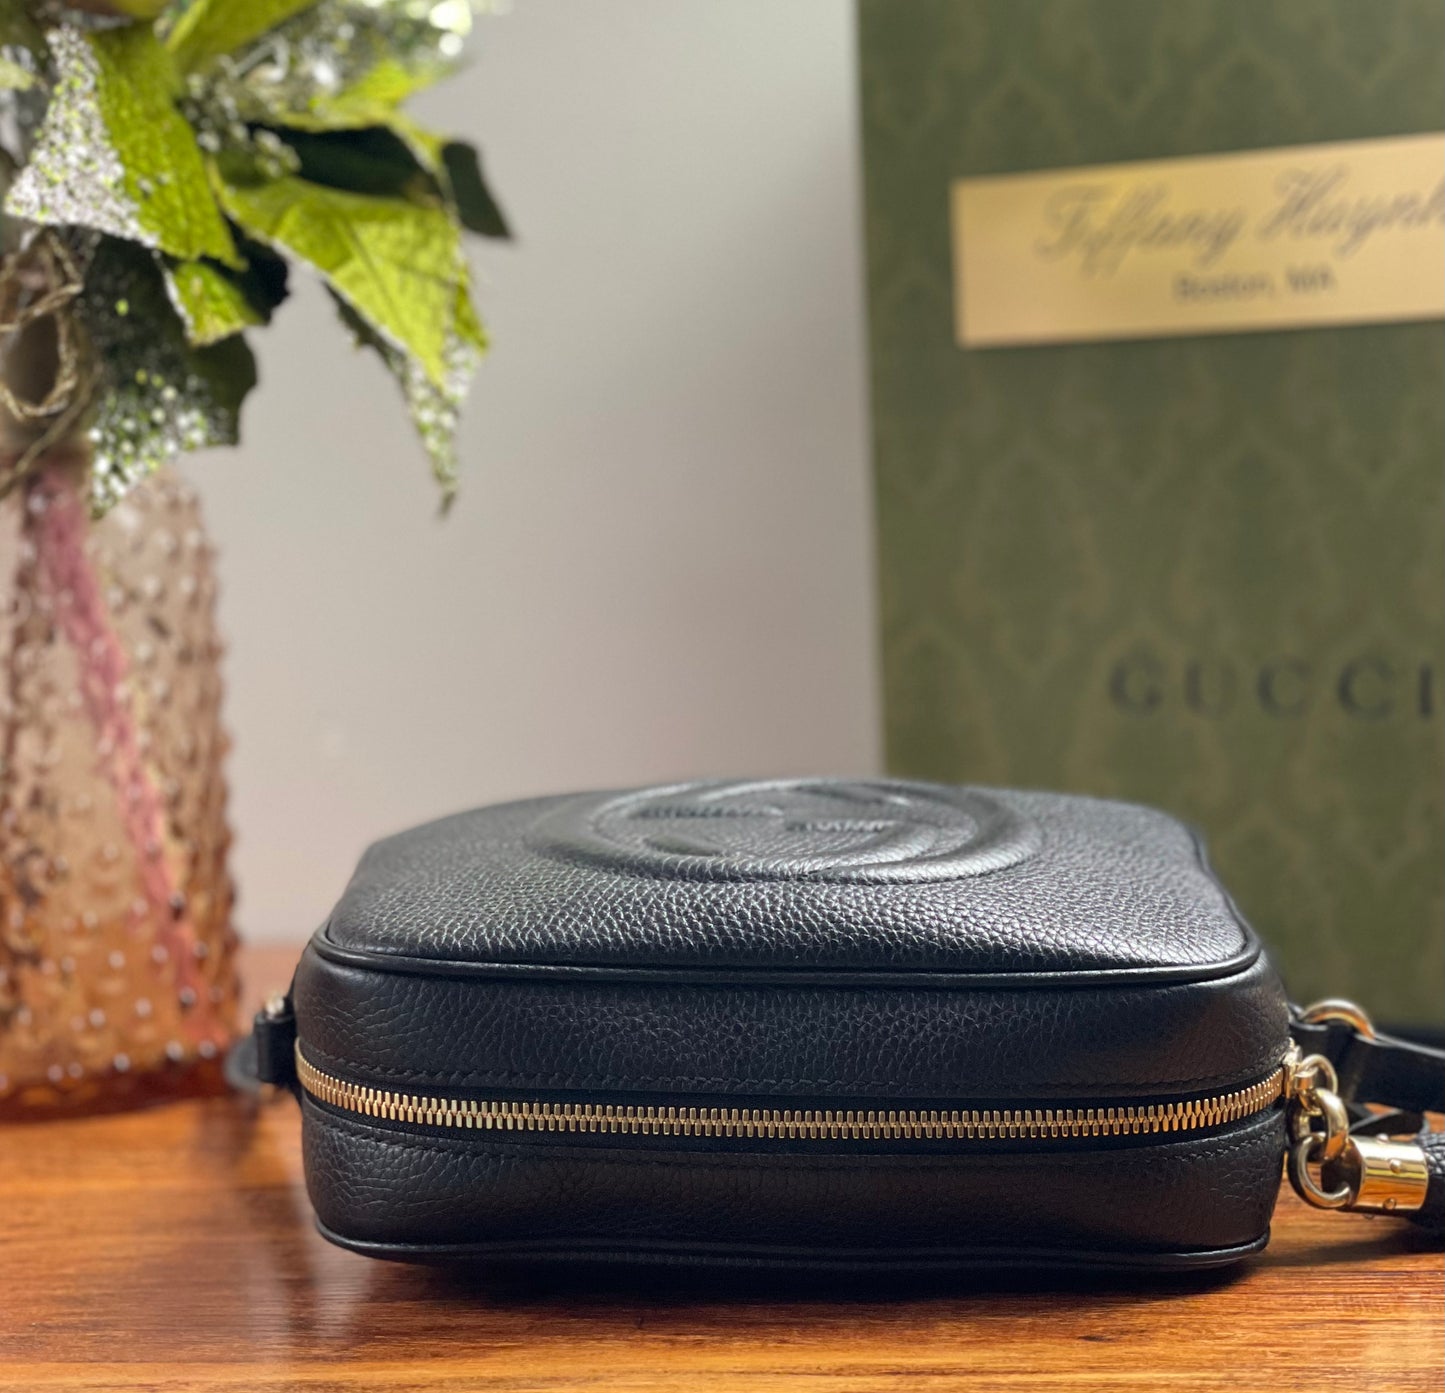 Authentic Gucci Soho Disco bag in Black